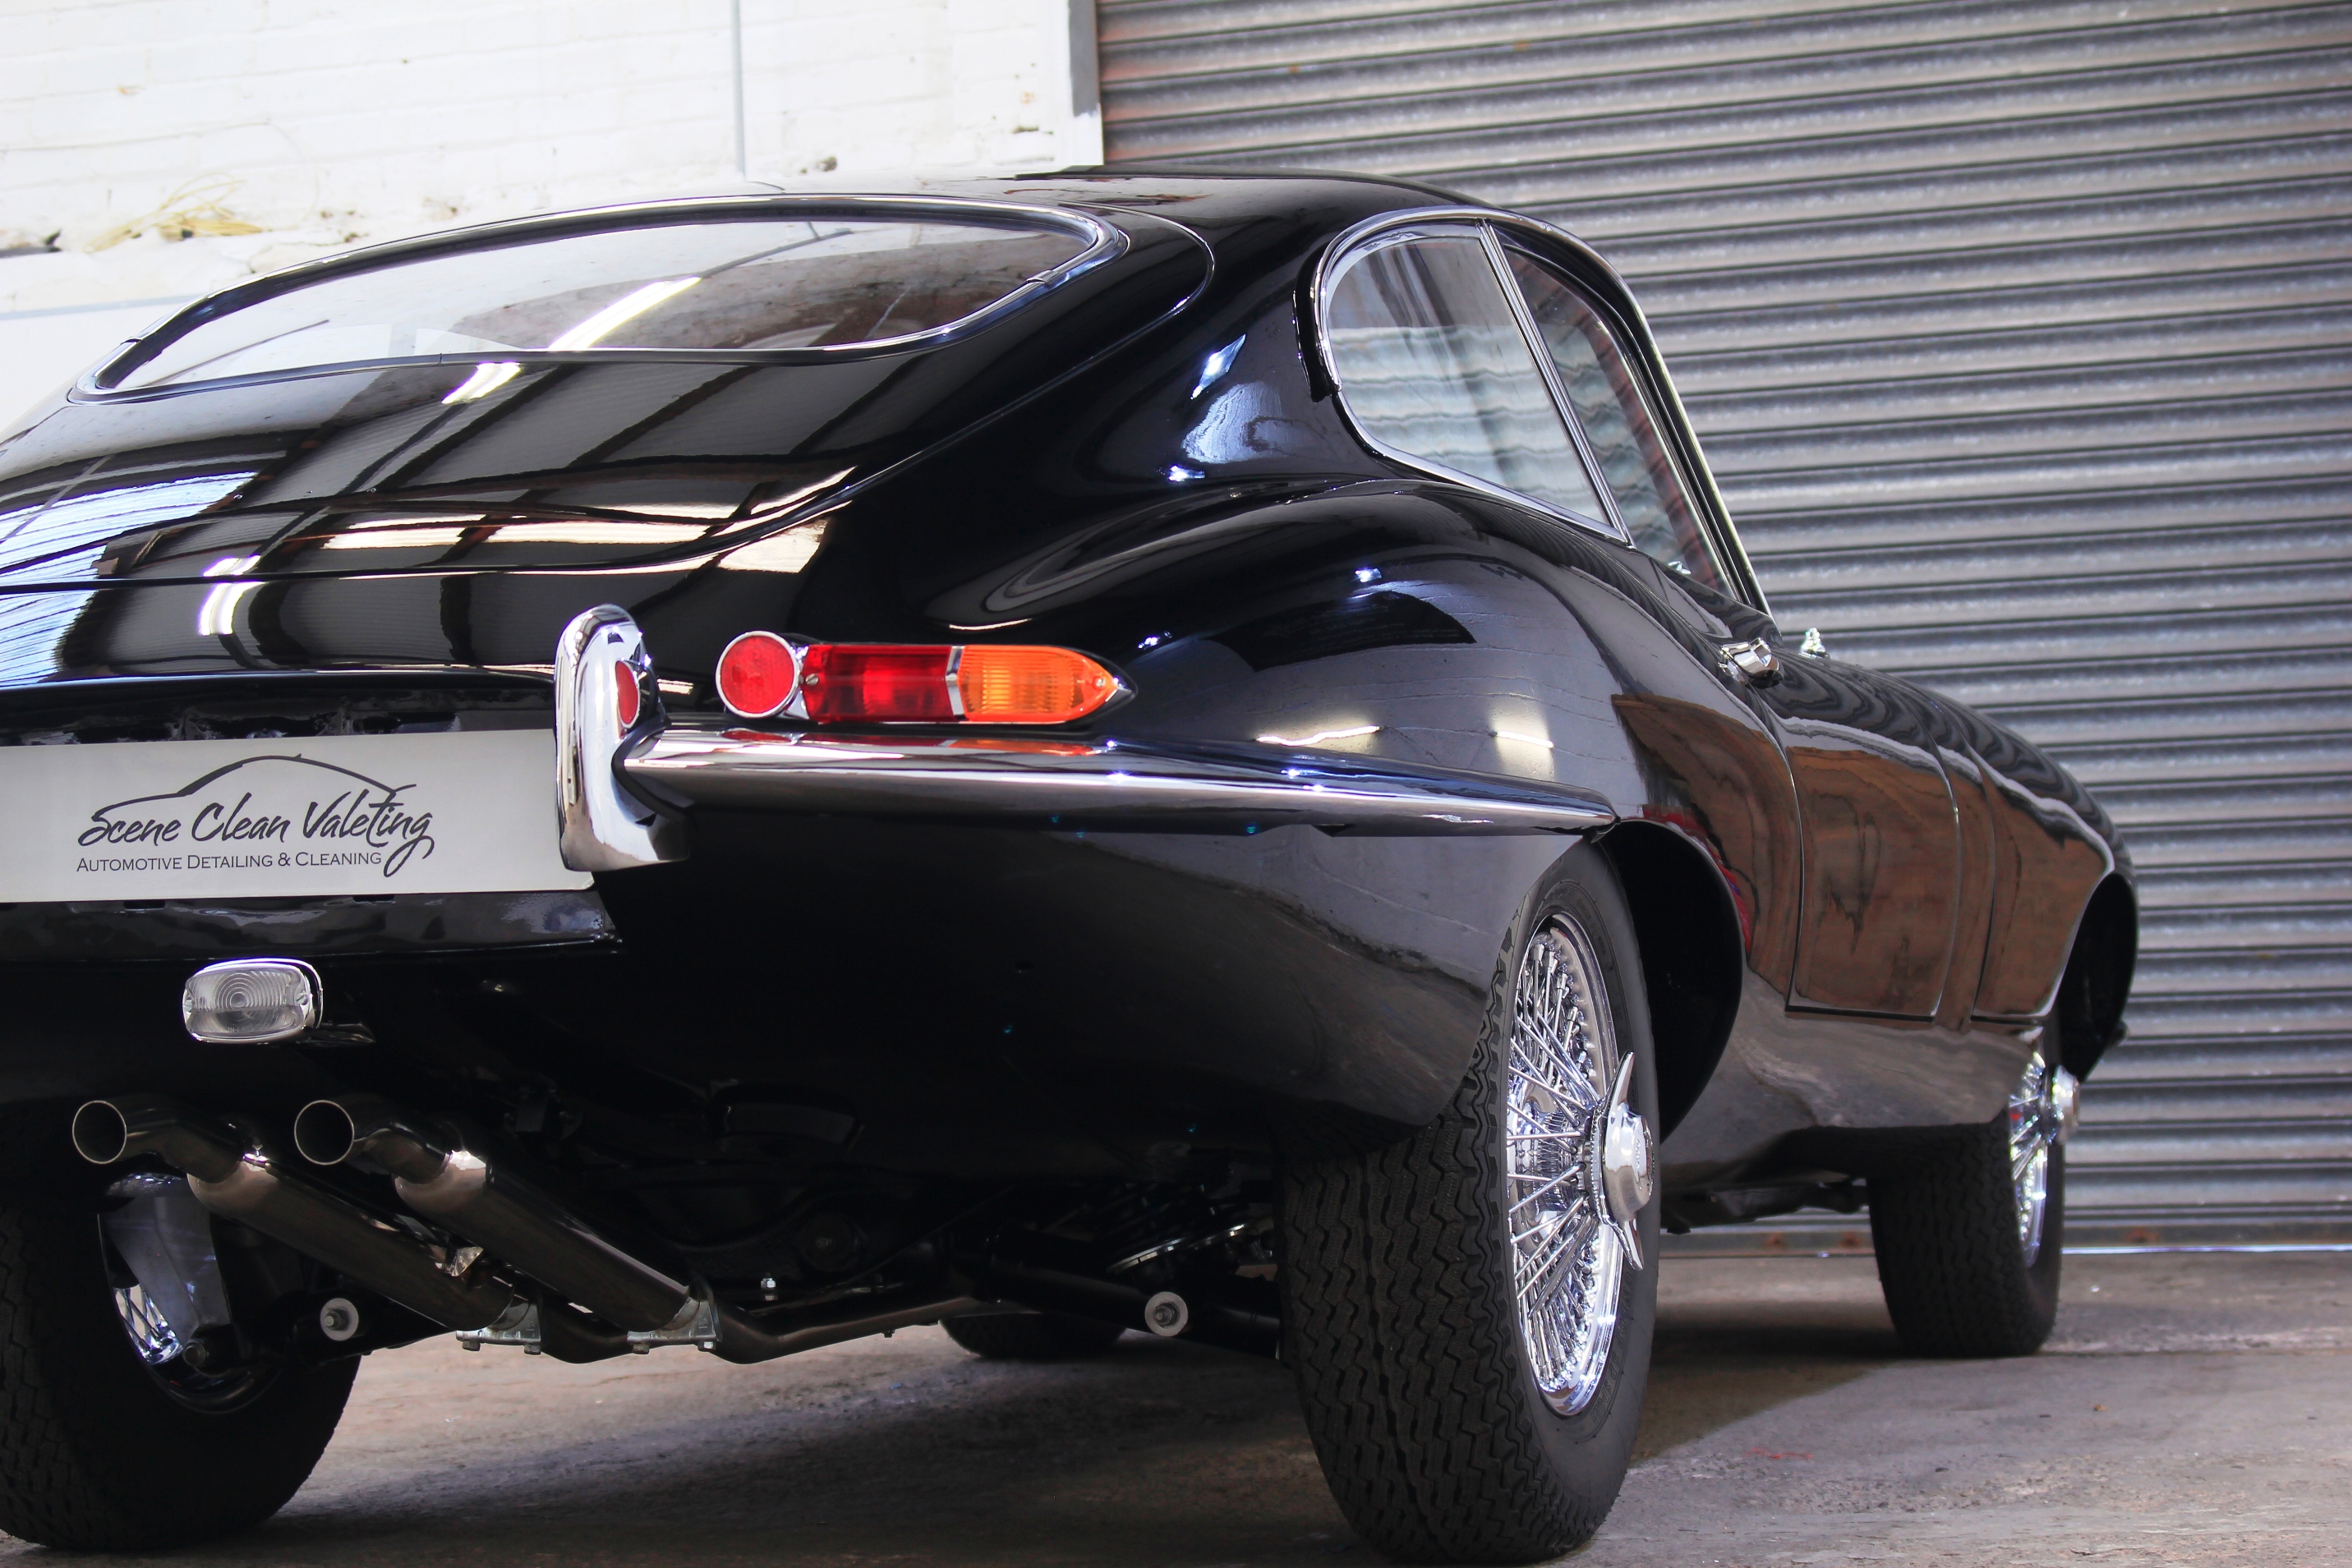 Jaguar, Jaguar E-Type, Valeting,Detailing, Scene Clean Valeting.